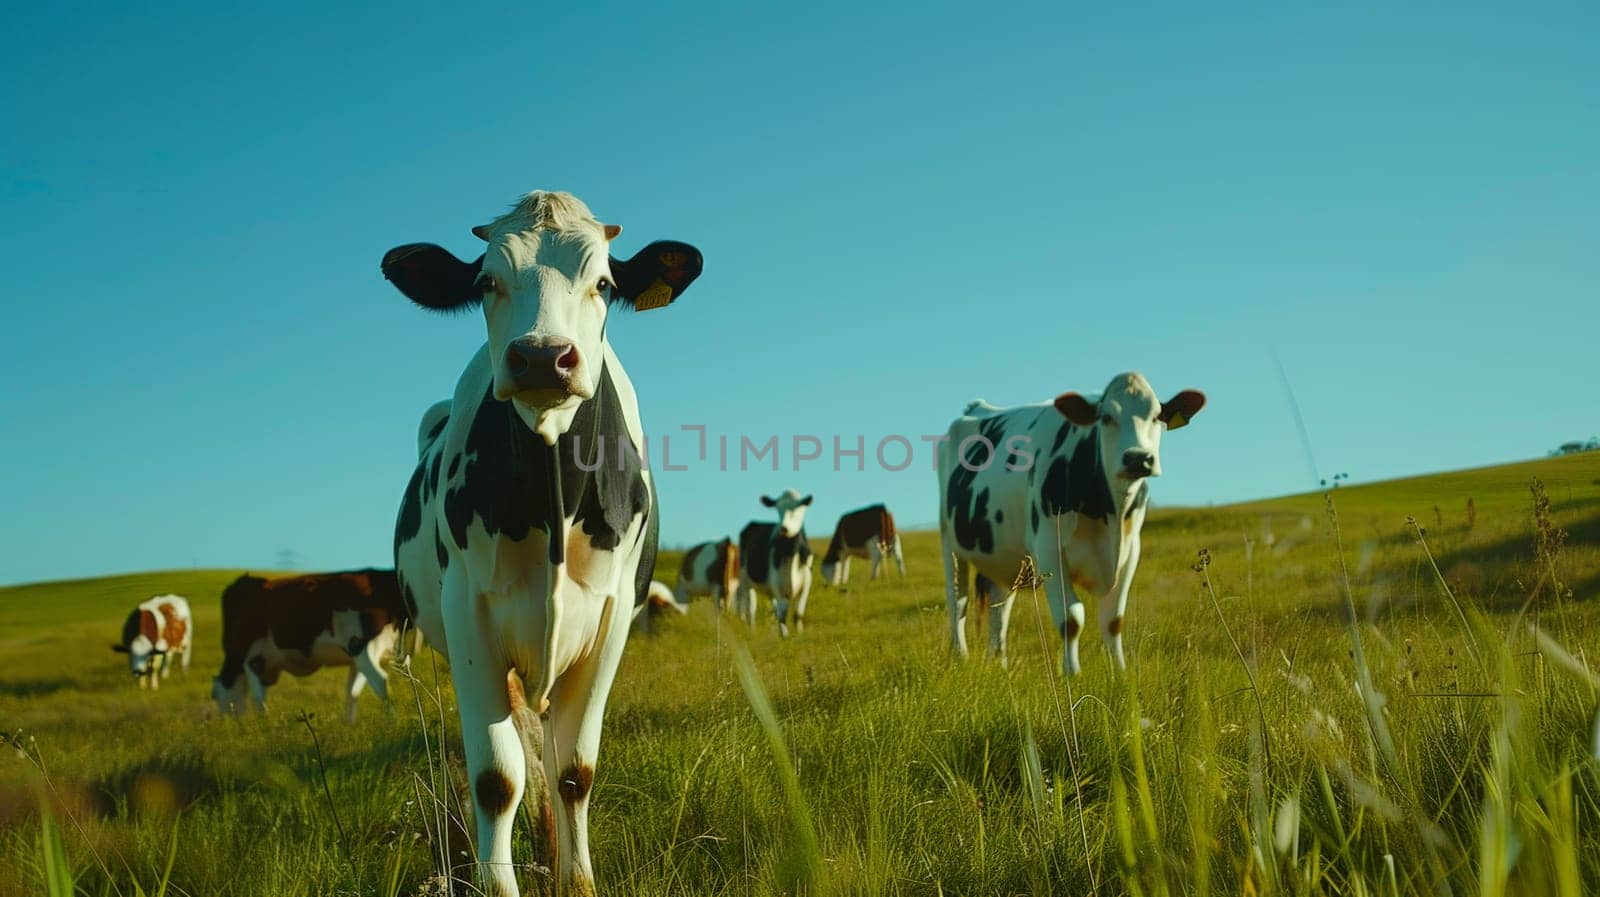 Cow farm, An image of cows in a meadow, Agriculture animal, organic farm by nijieimu